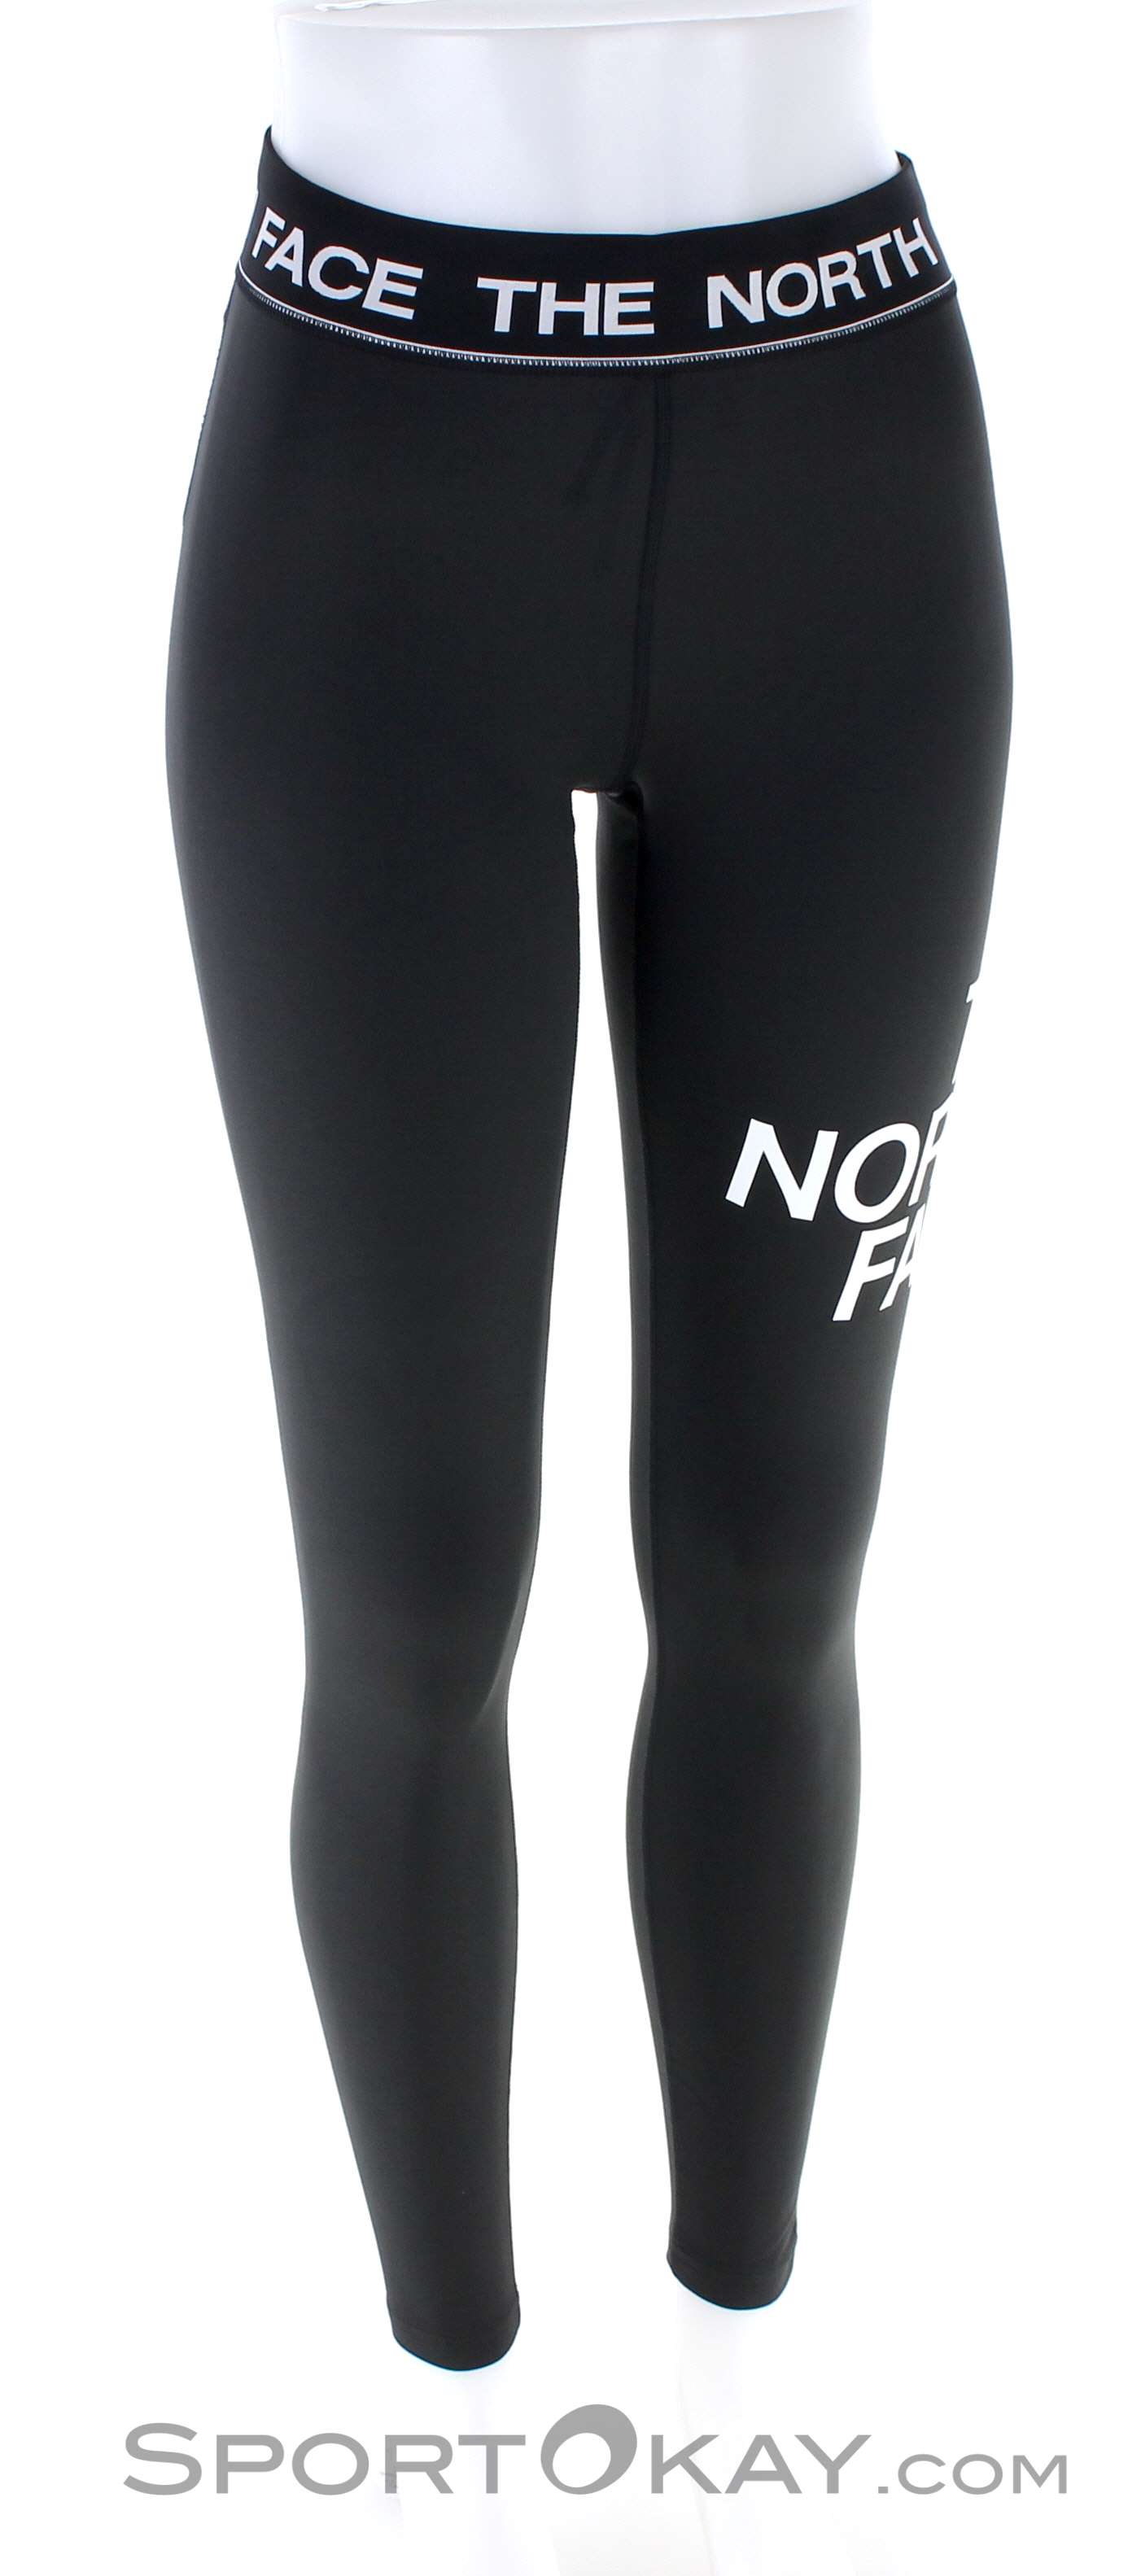 The North Face Flex logo leggings in black